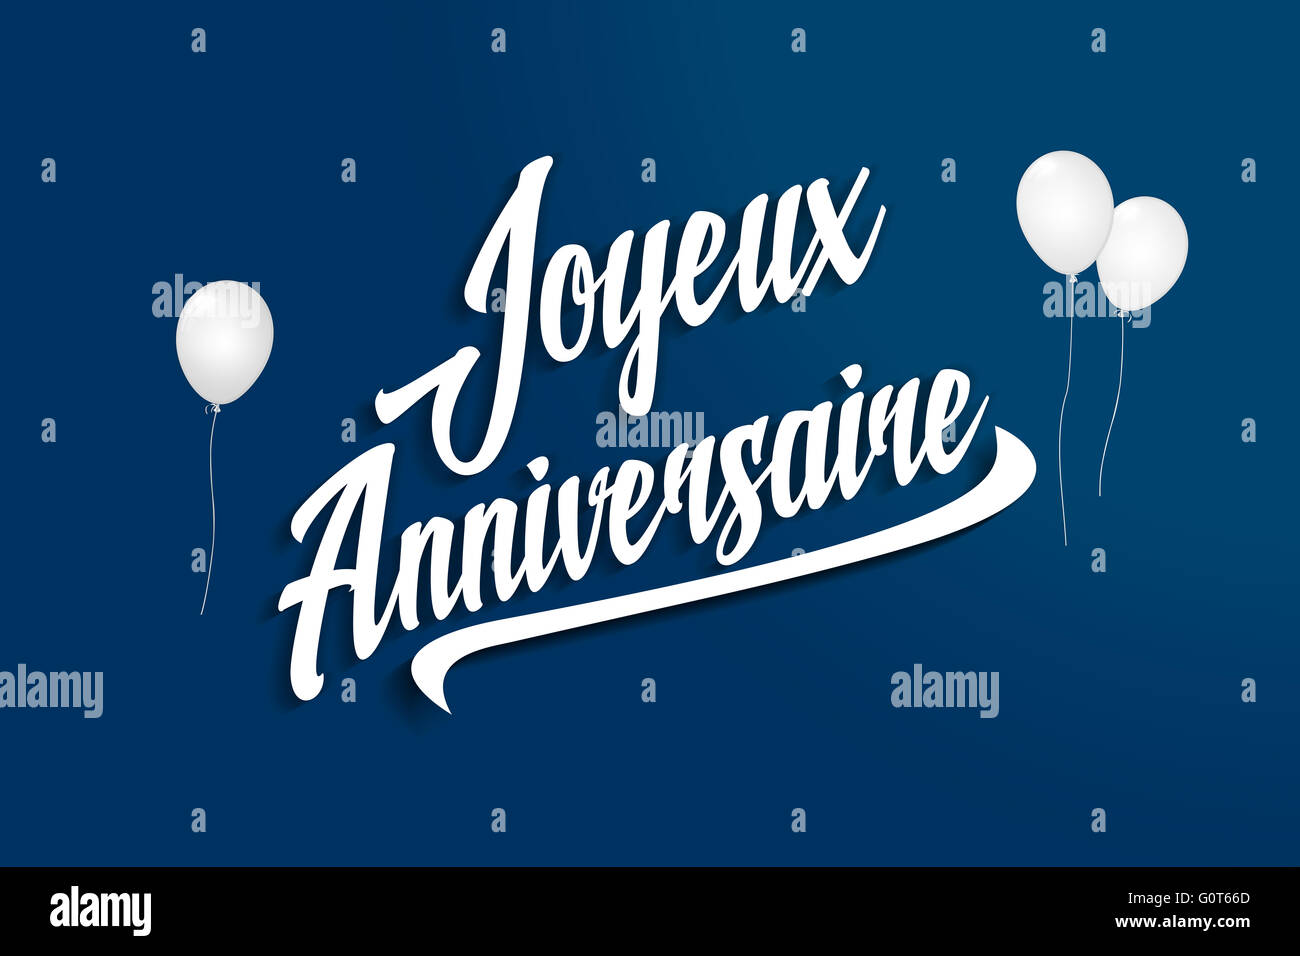 joyeux anniversaire happy birthday in french balloons anniversary G0T66D